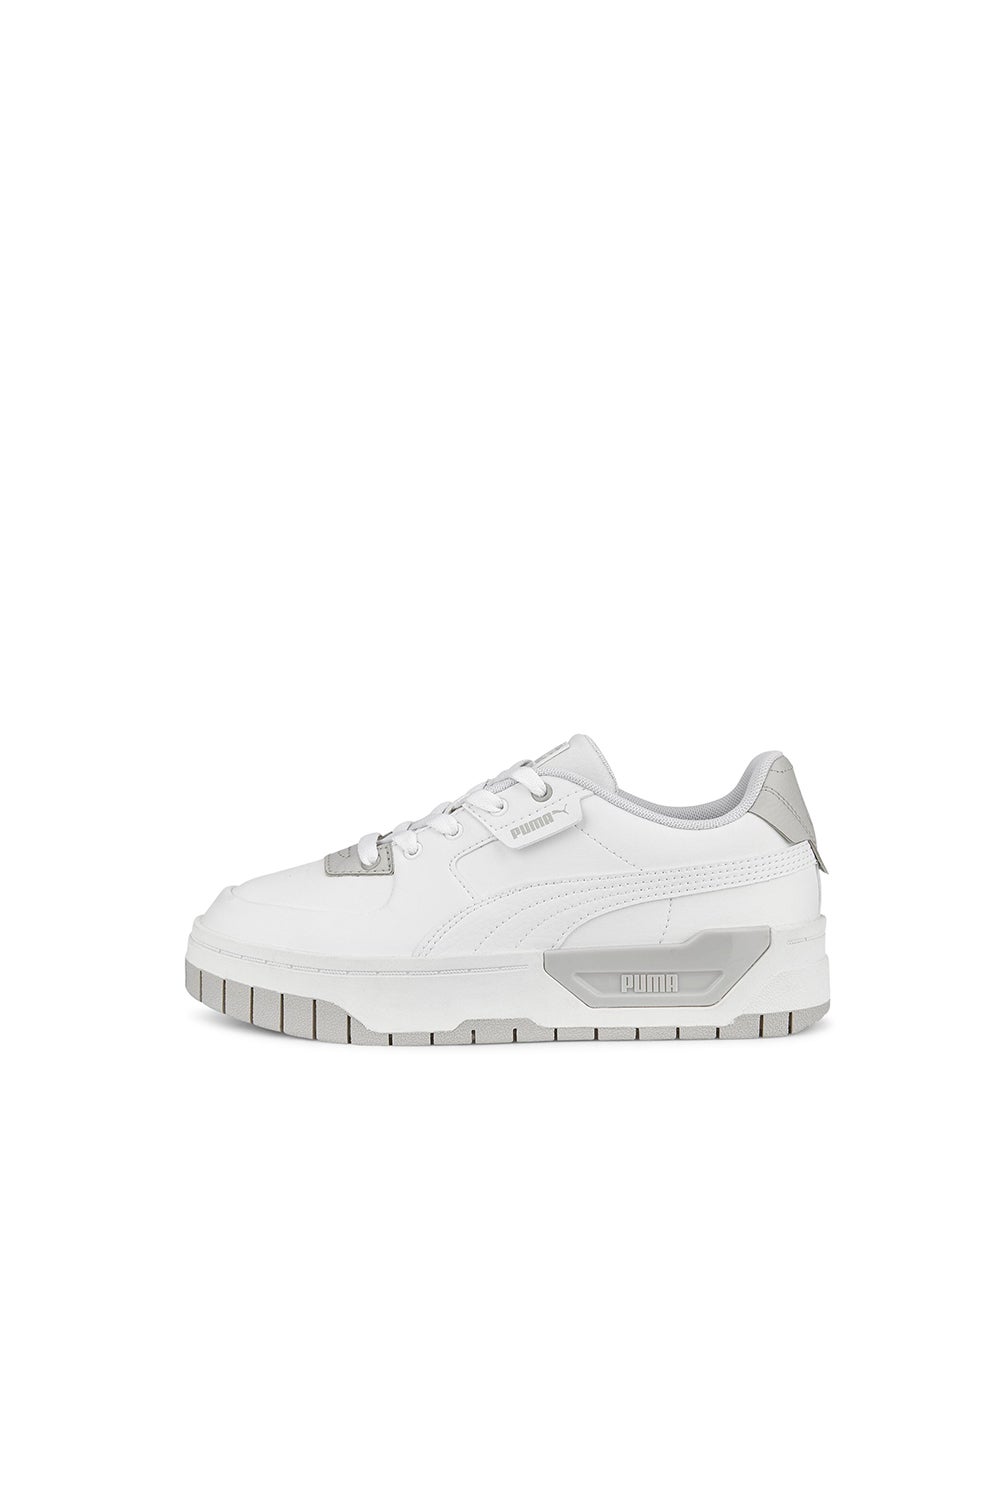 Puma Cali Dream Re-Style Sneakers White/Gray Violet